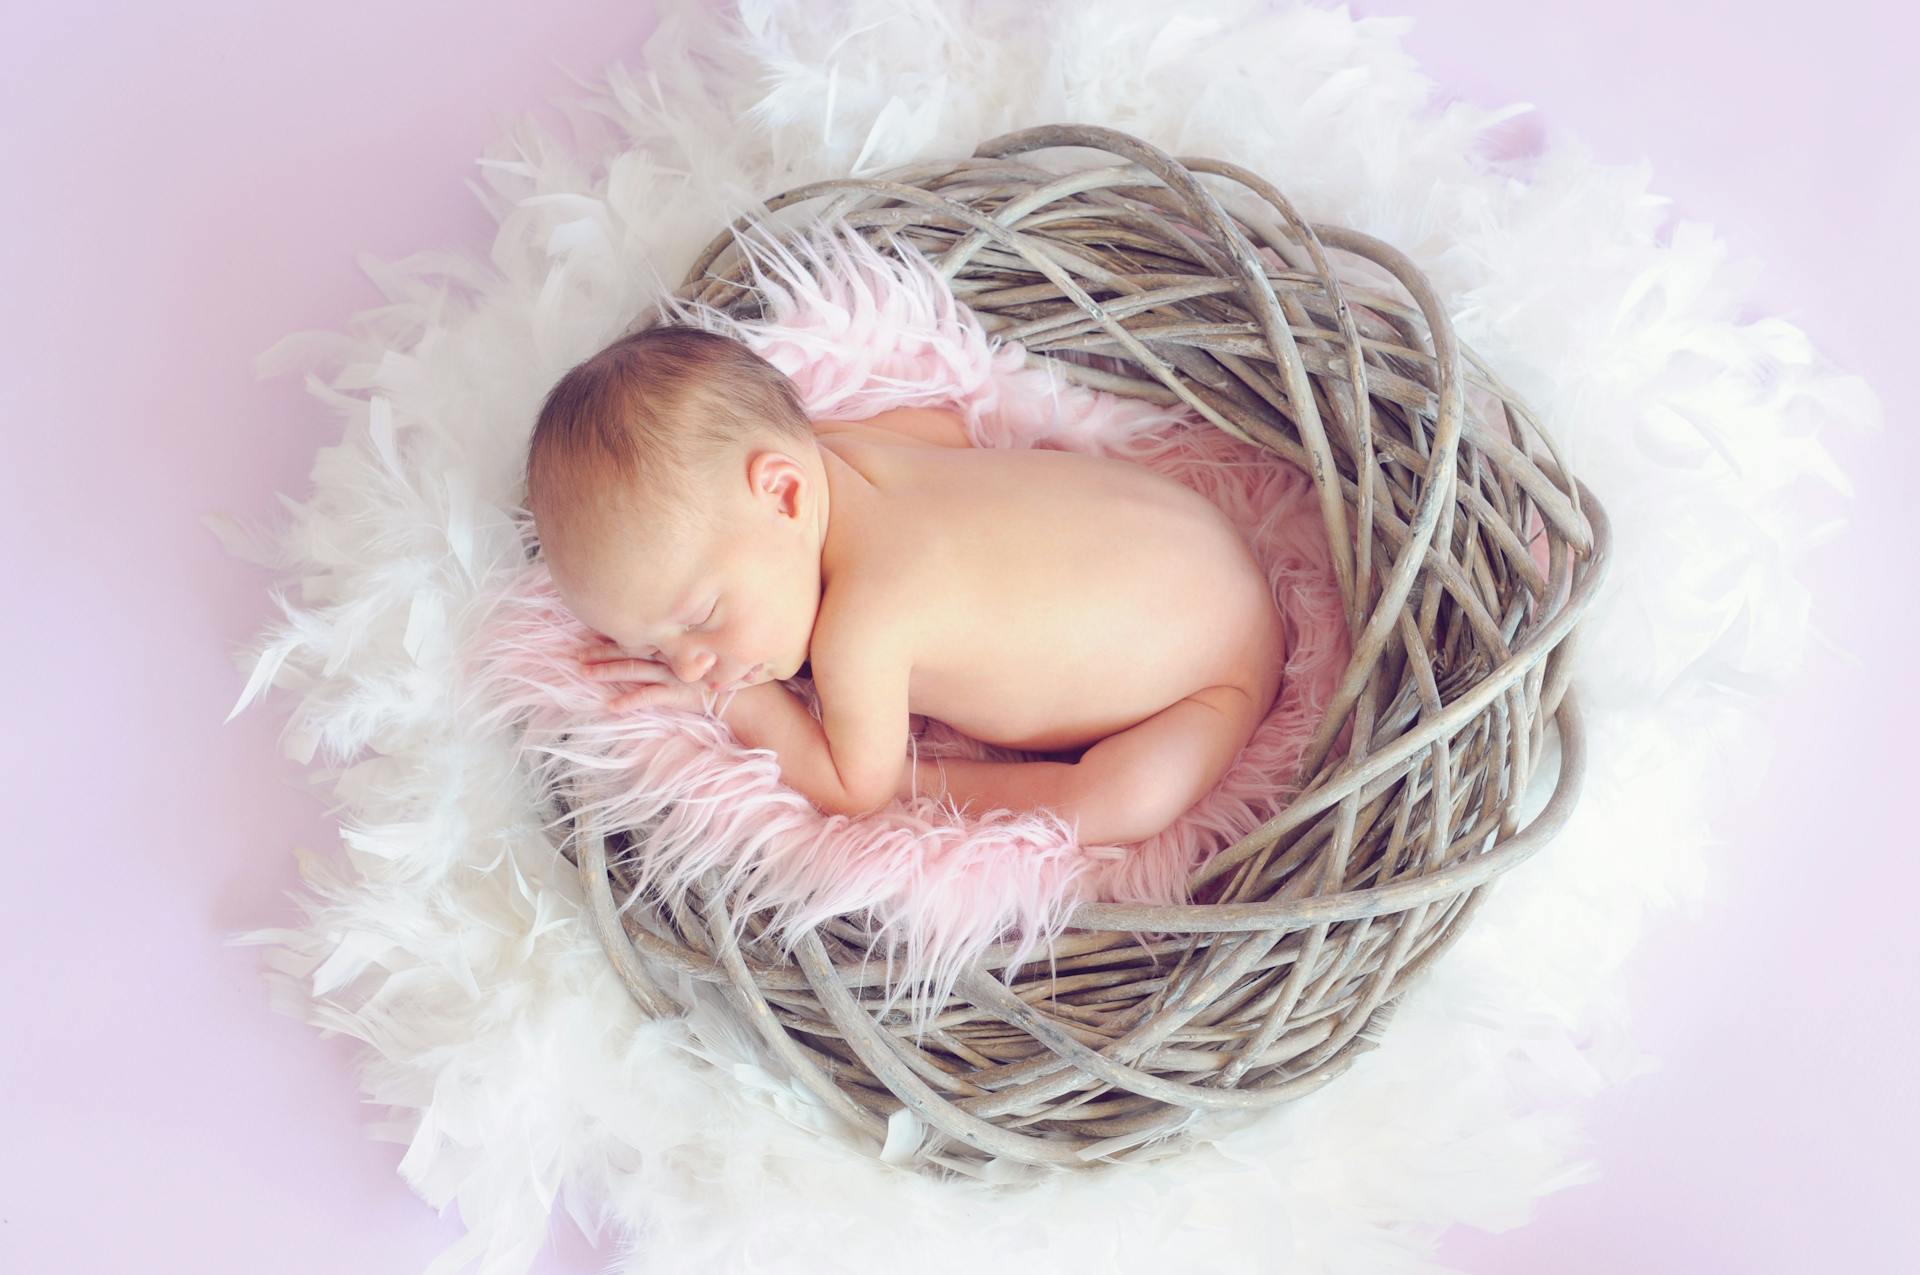 A newborn baby girl | Source: Pexels